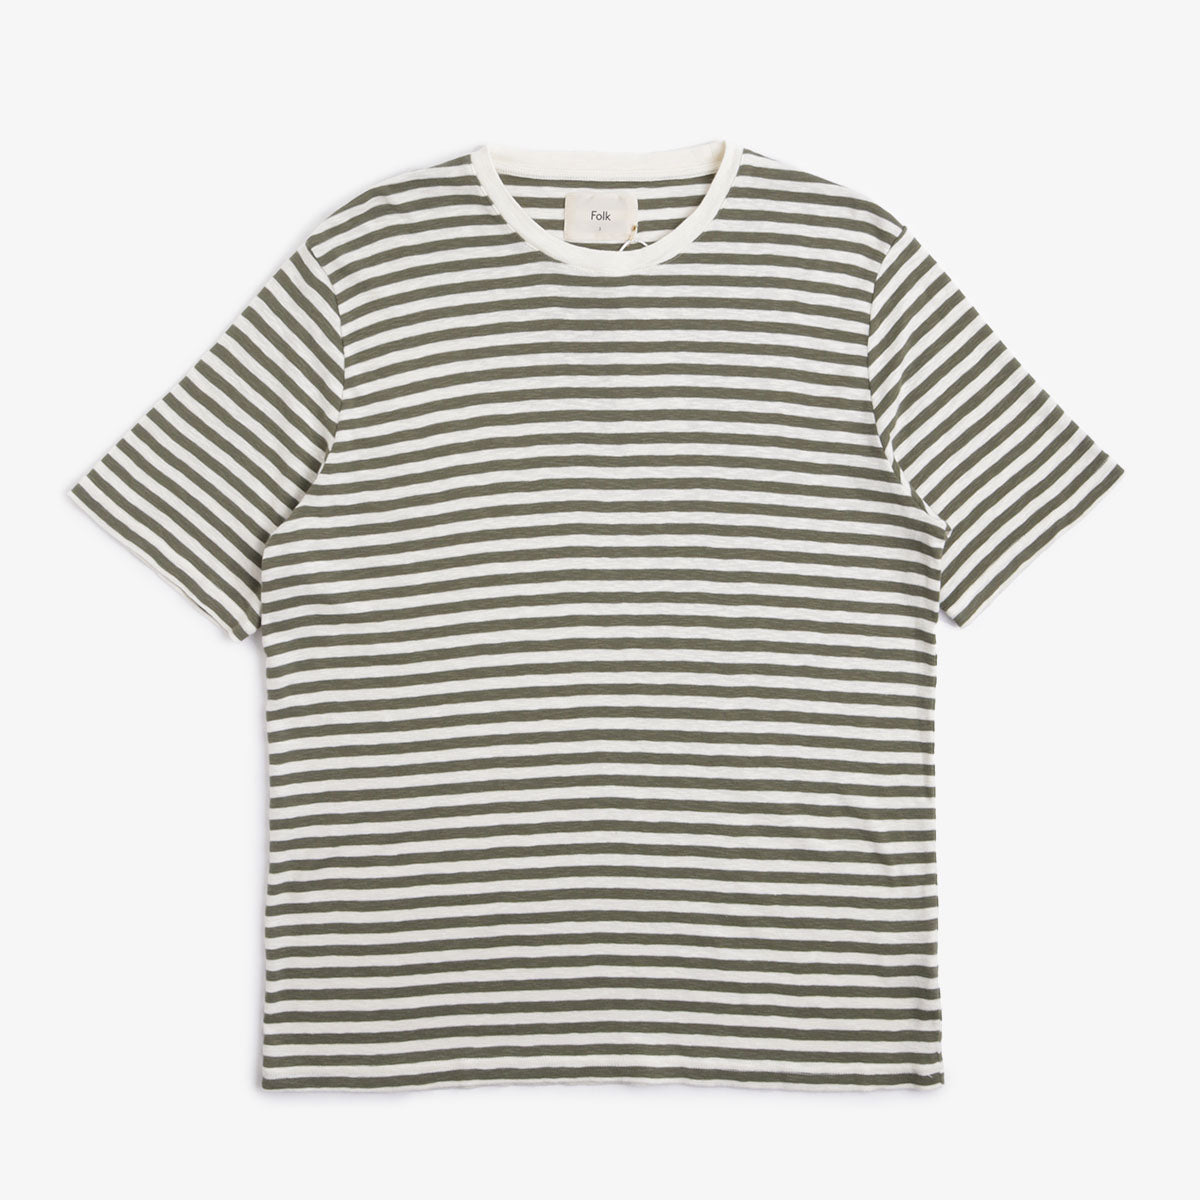 Folk Classic Stripe T-Shirt, Olive Ecru, Detail Shot 1